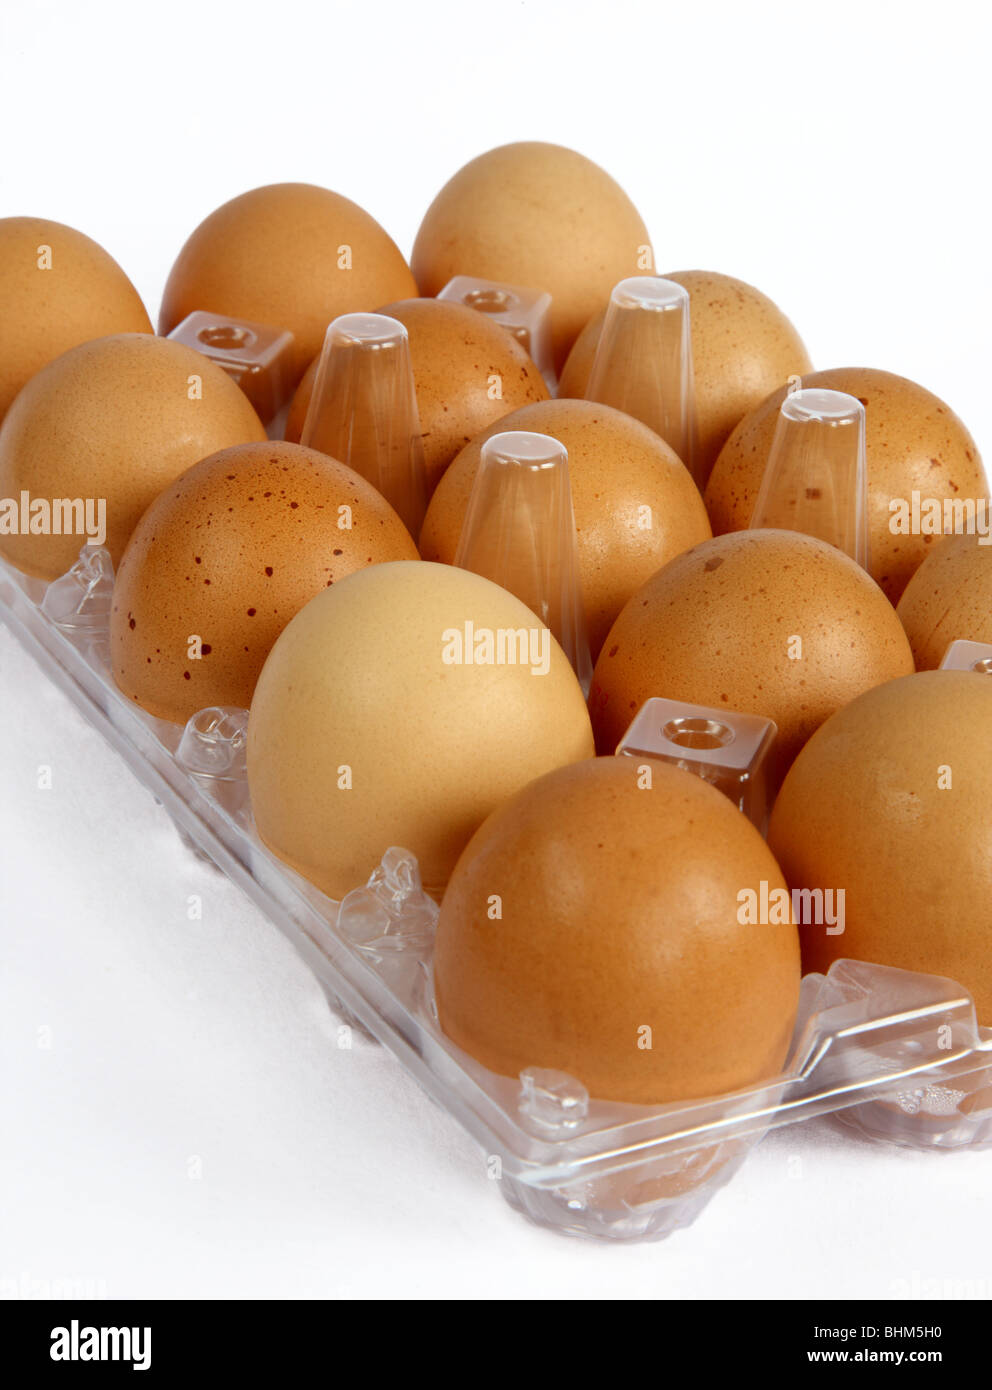 New laid brown free range eggs in plastic carton Stock Photo